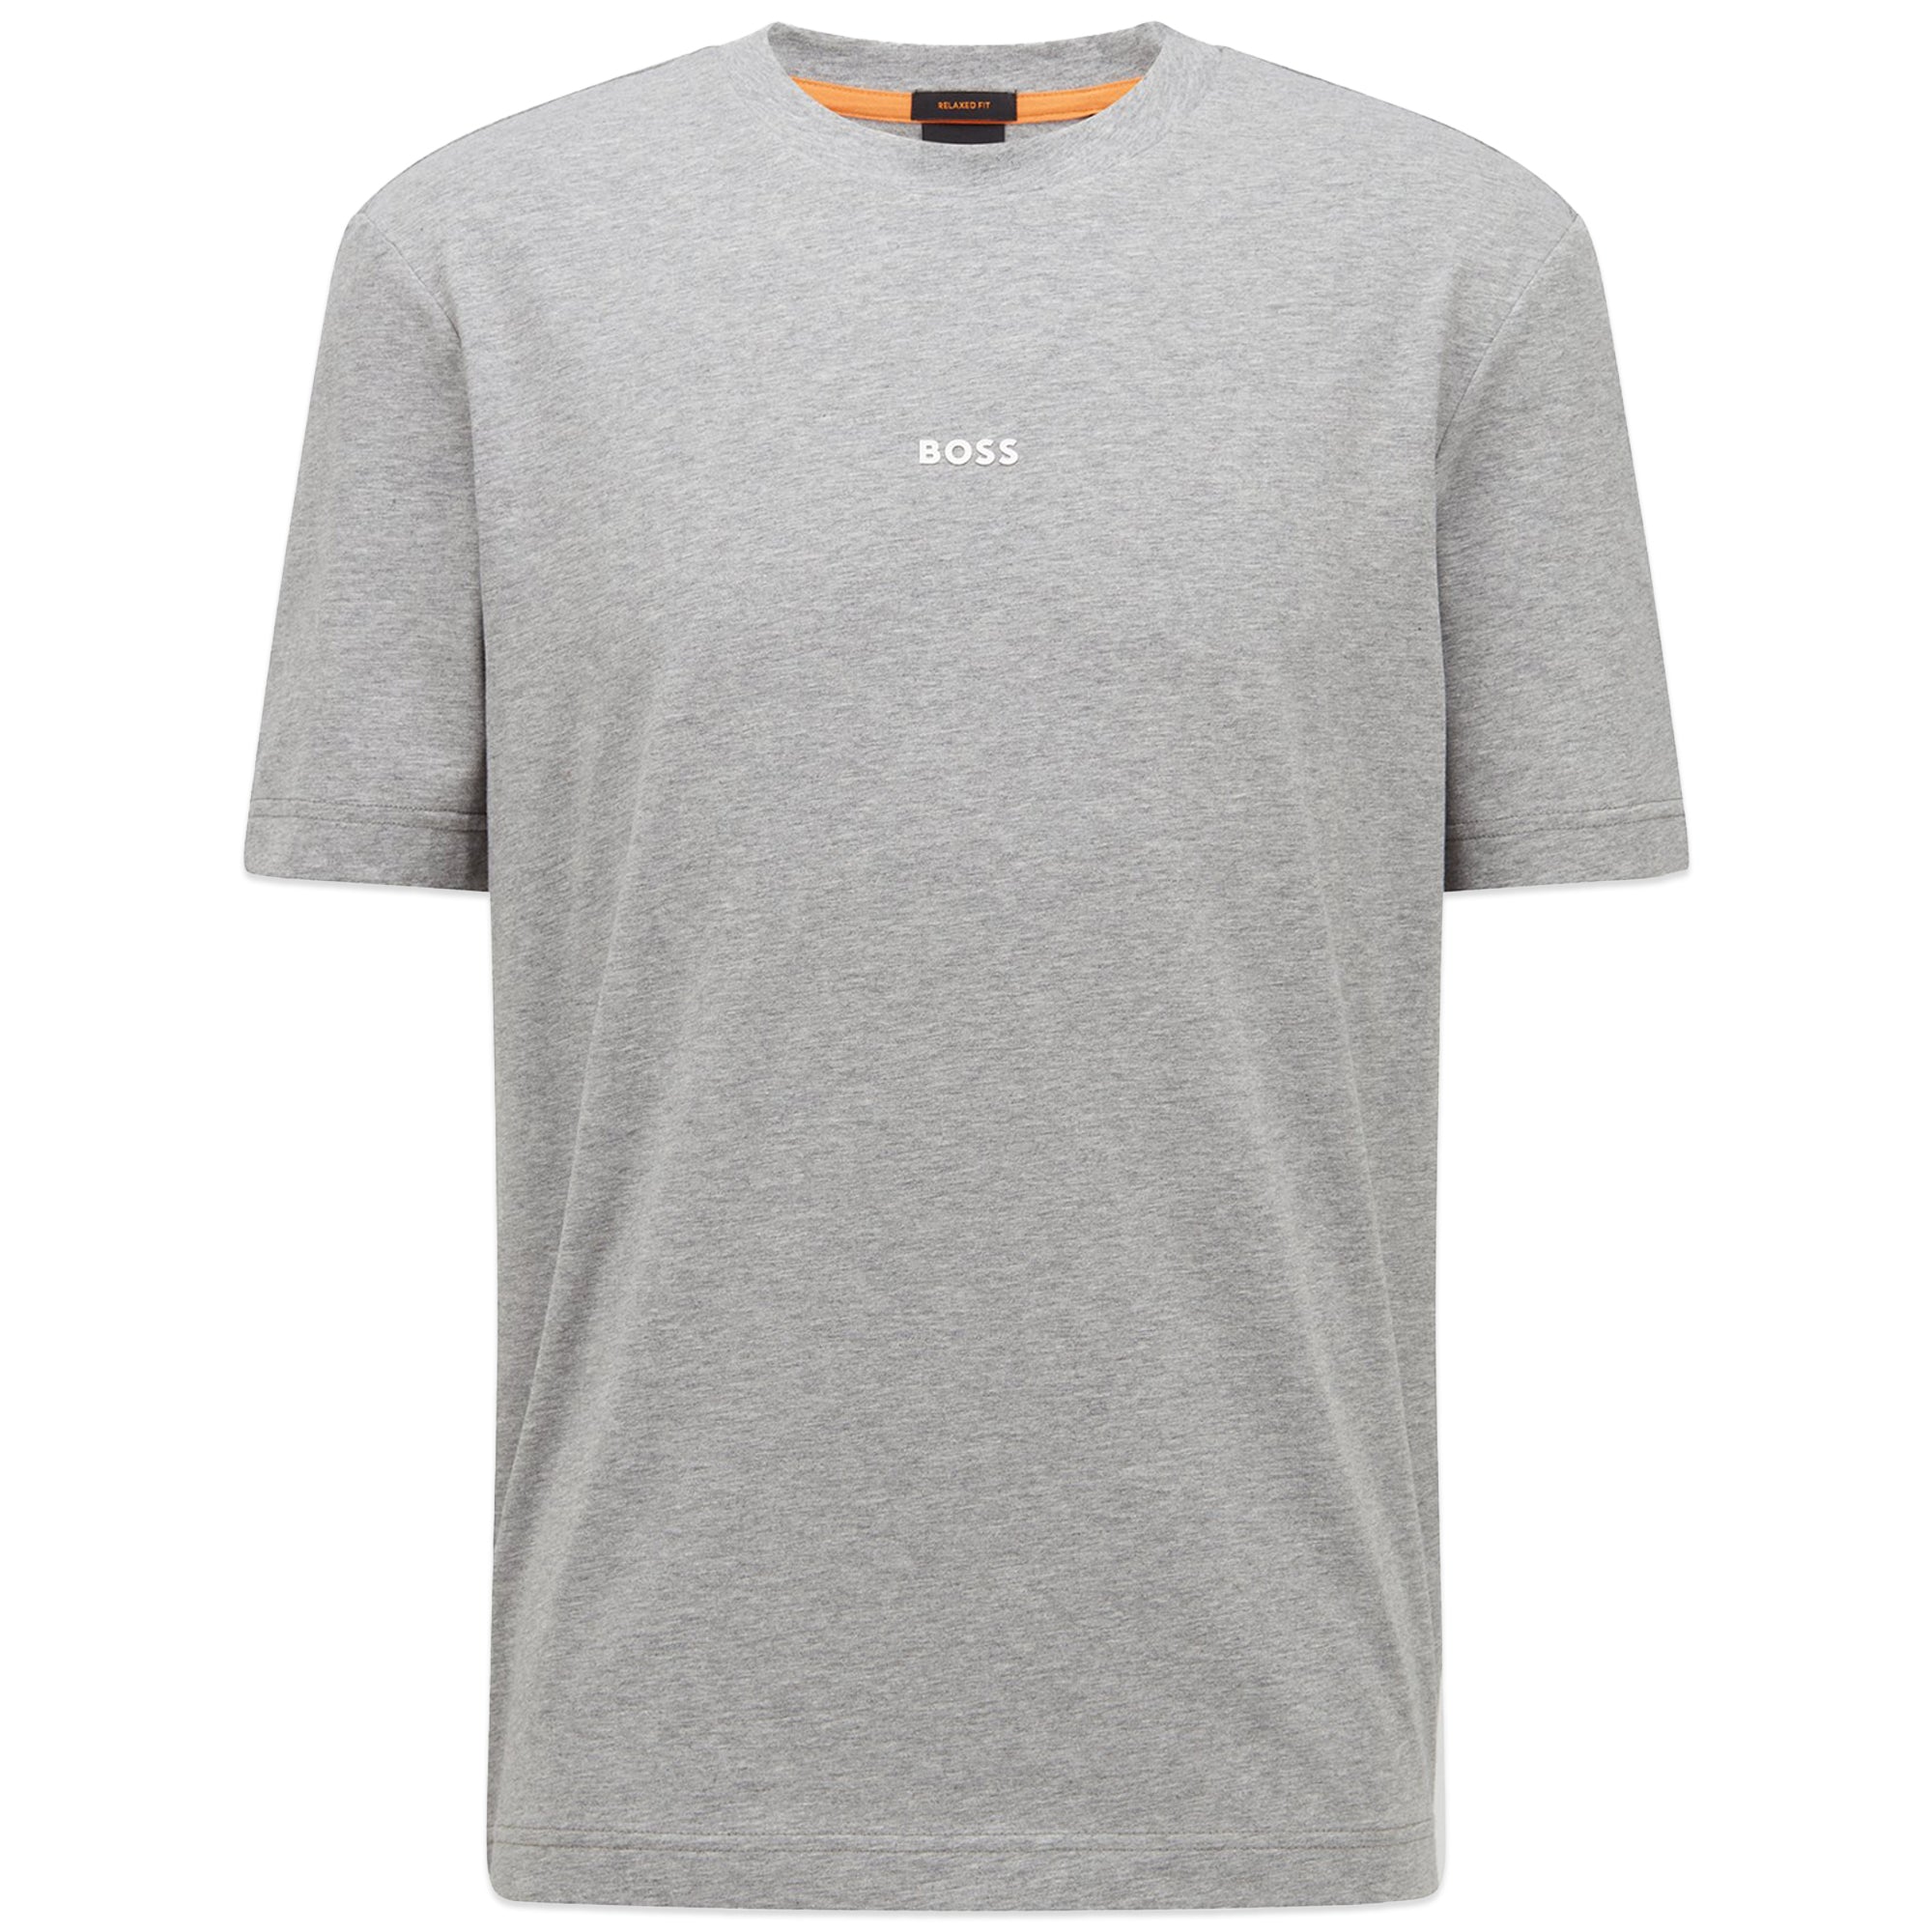 Boss TChup T-Shirt - Grey